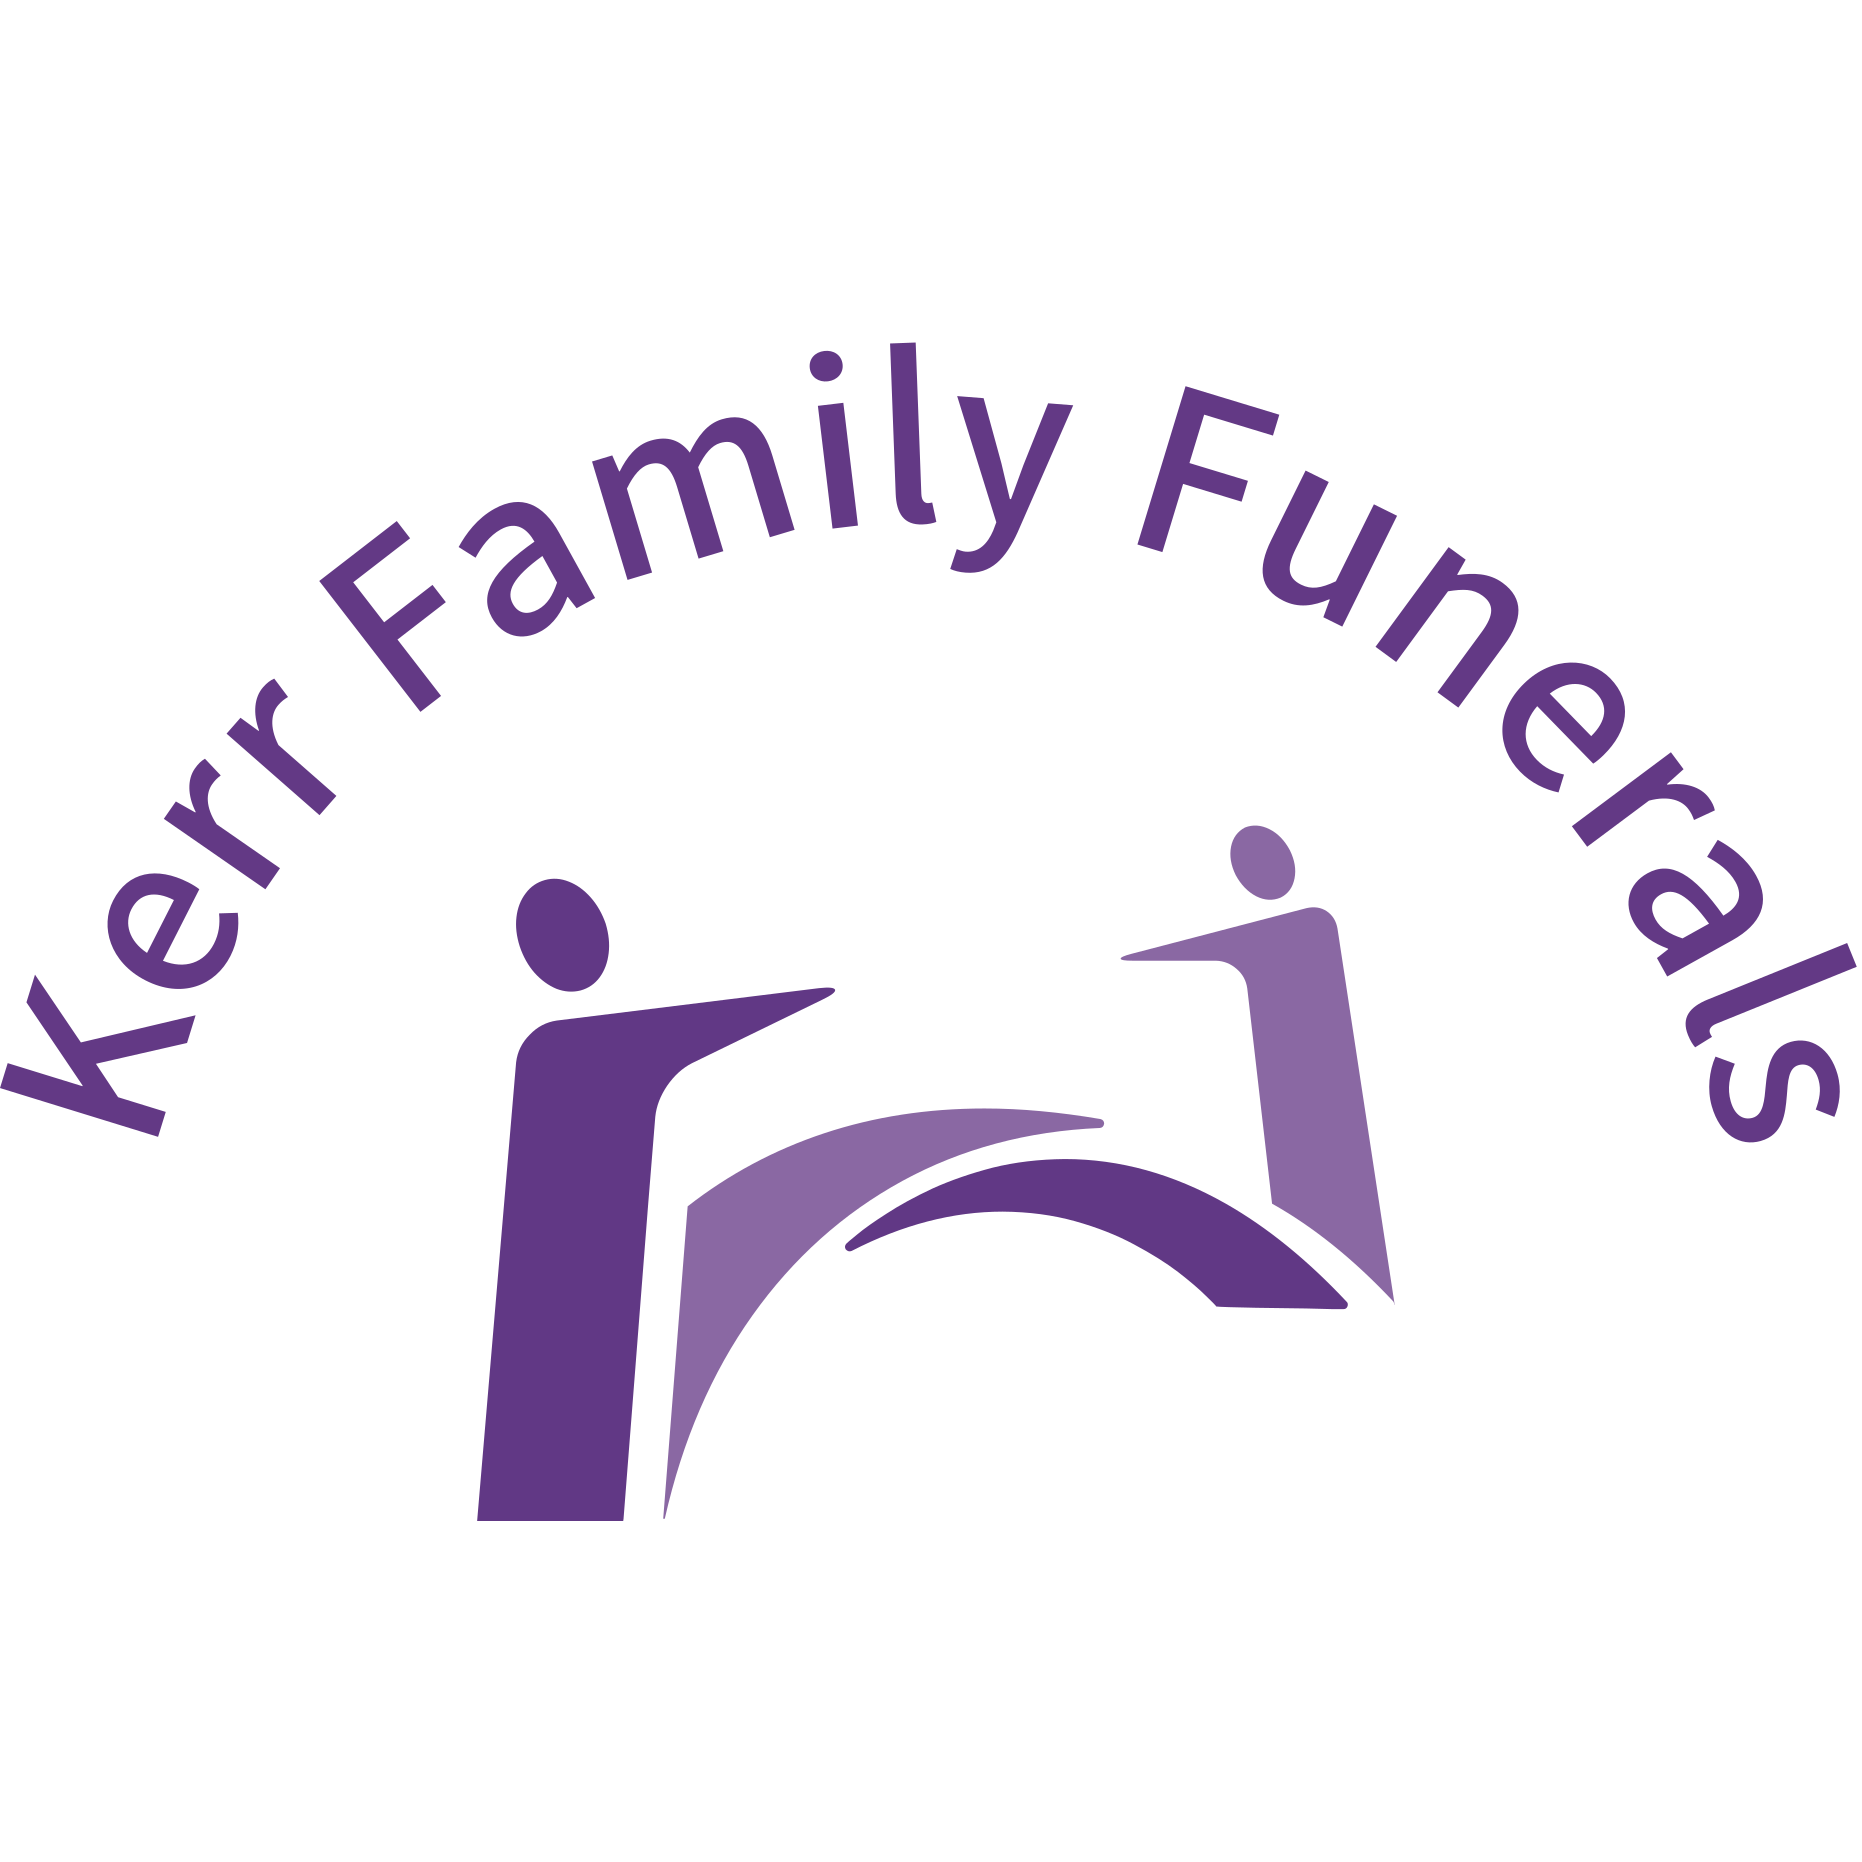 Kerr Family Funerals logo